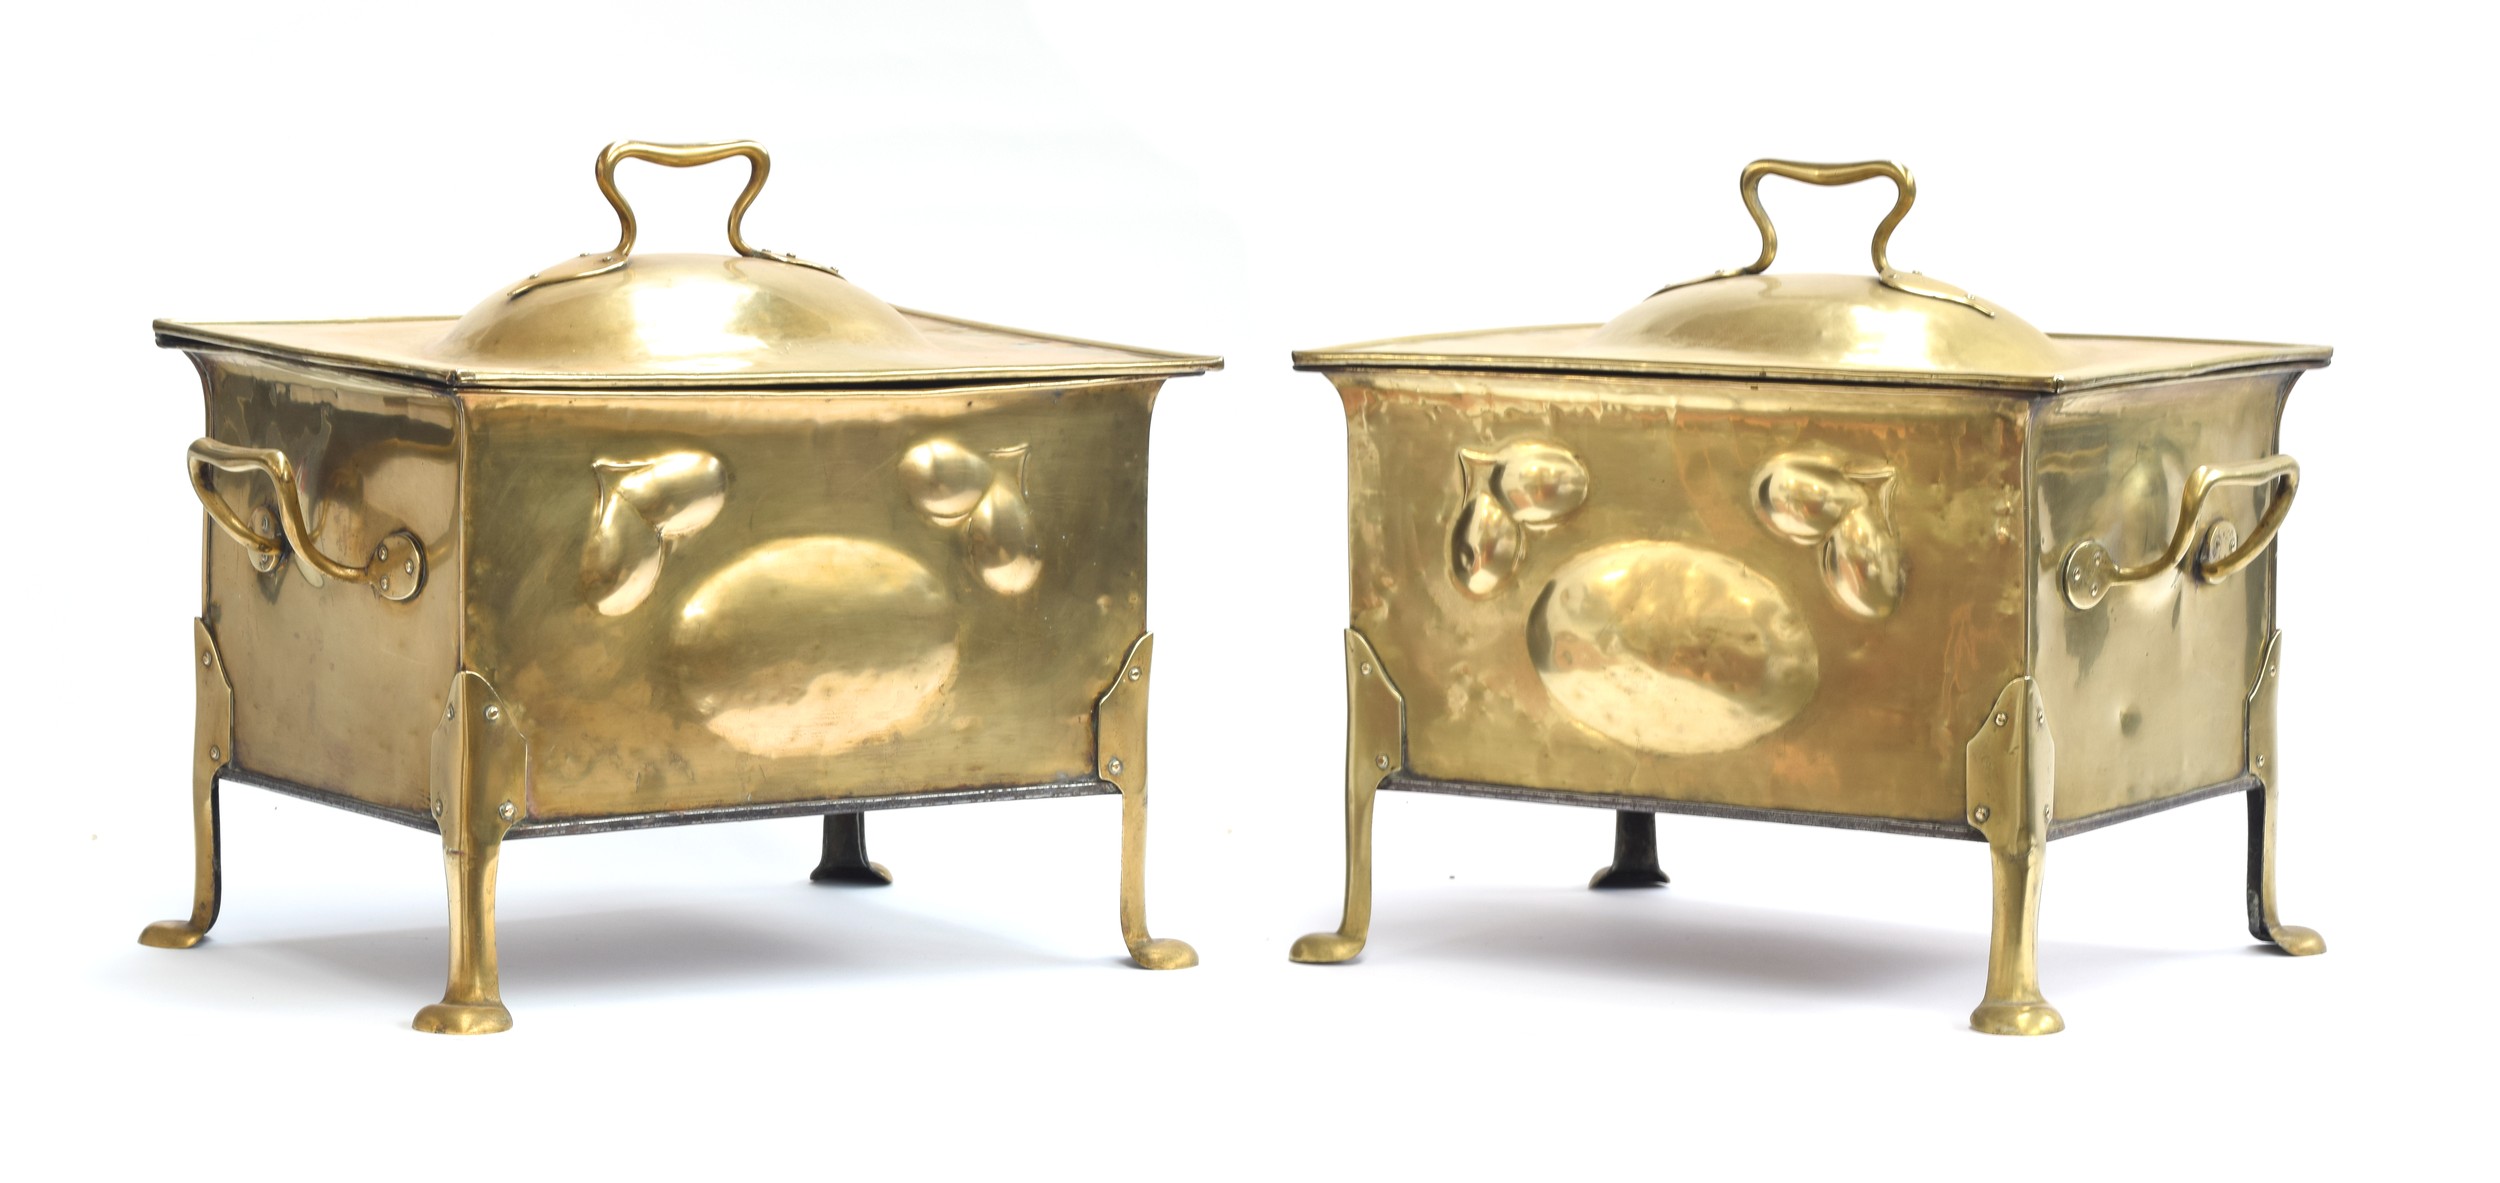 A pair of large Art Nouveau brass coal scuttles, with liners, 52cm wide, 34cm deep, 42cm high